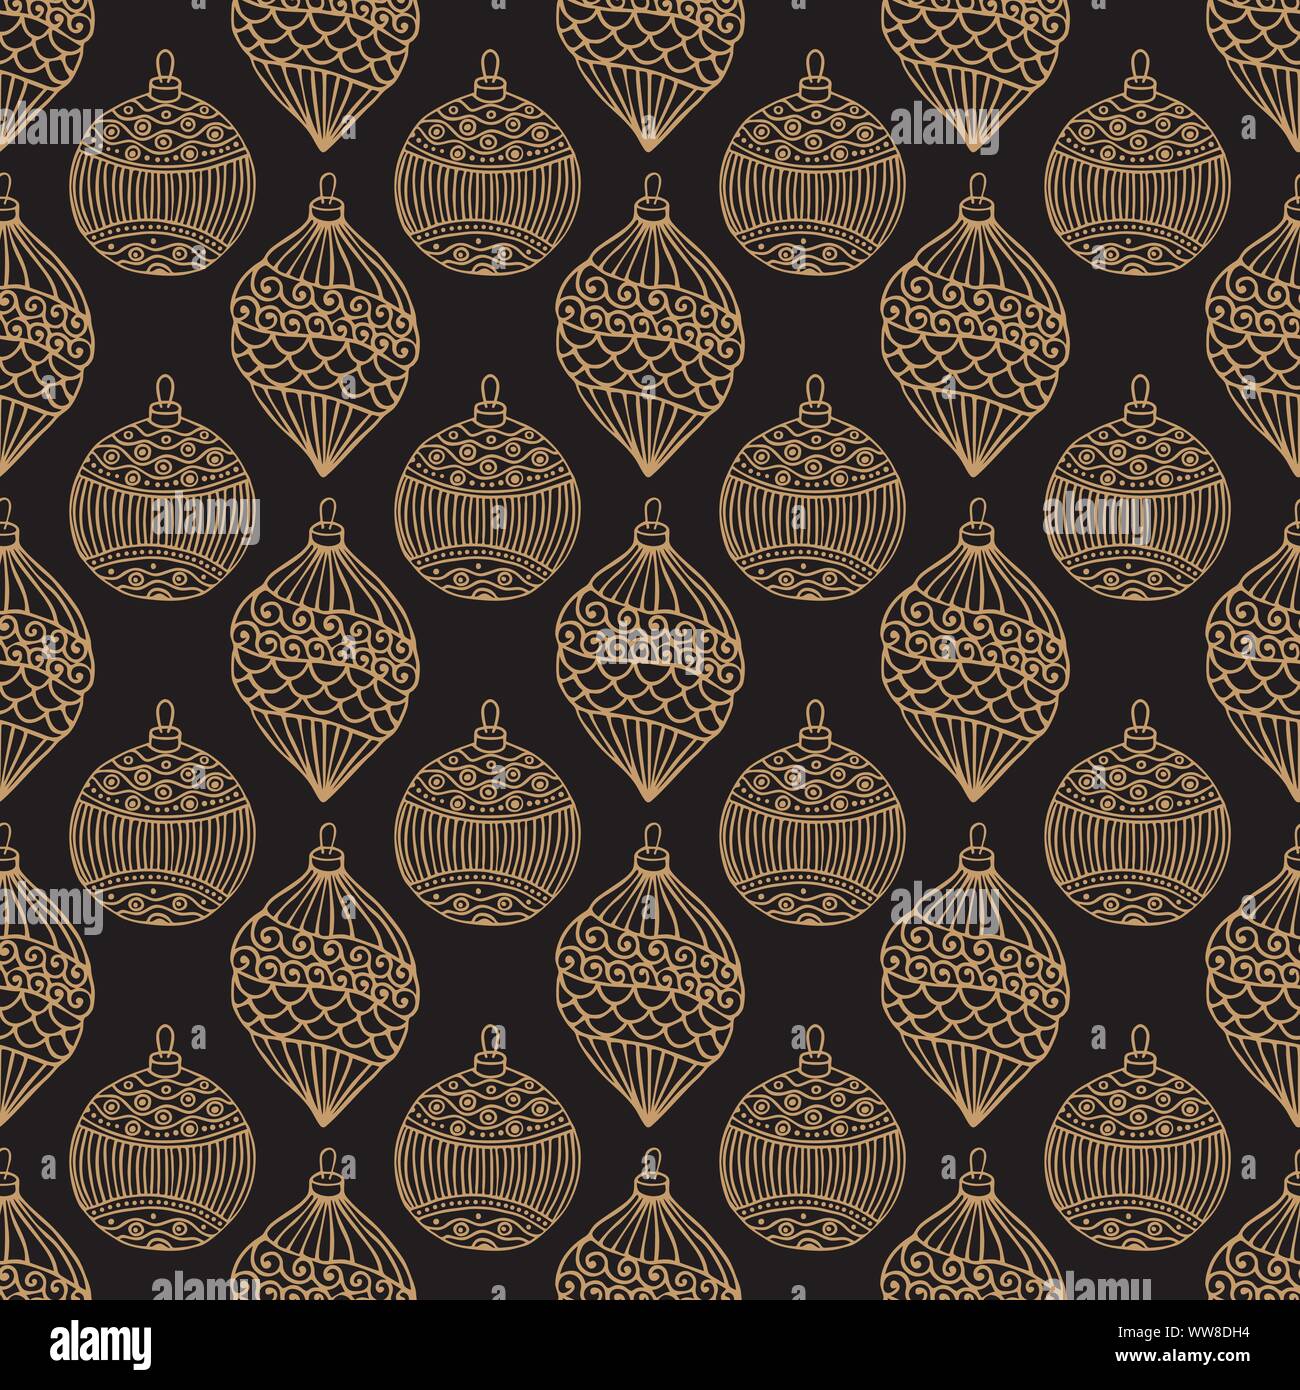 Xmas Seamless pattern with Christmas tree balls hand drawn art design vector illustration Stock Vector